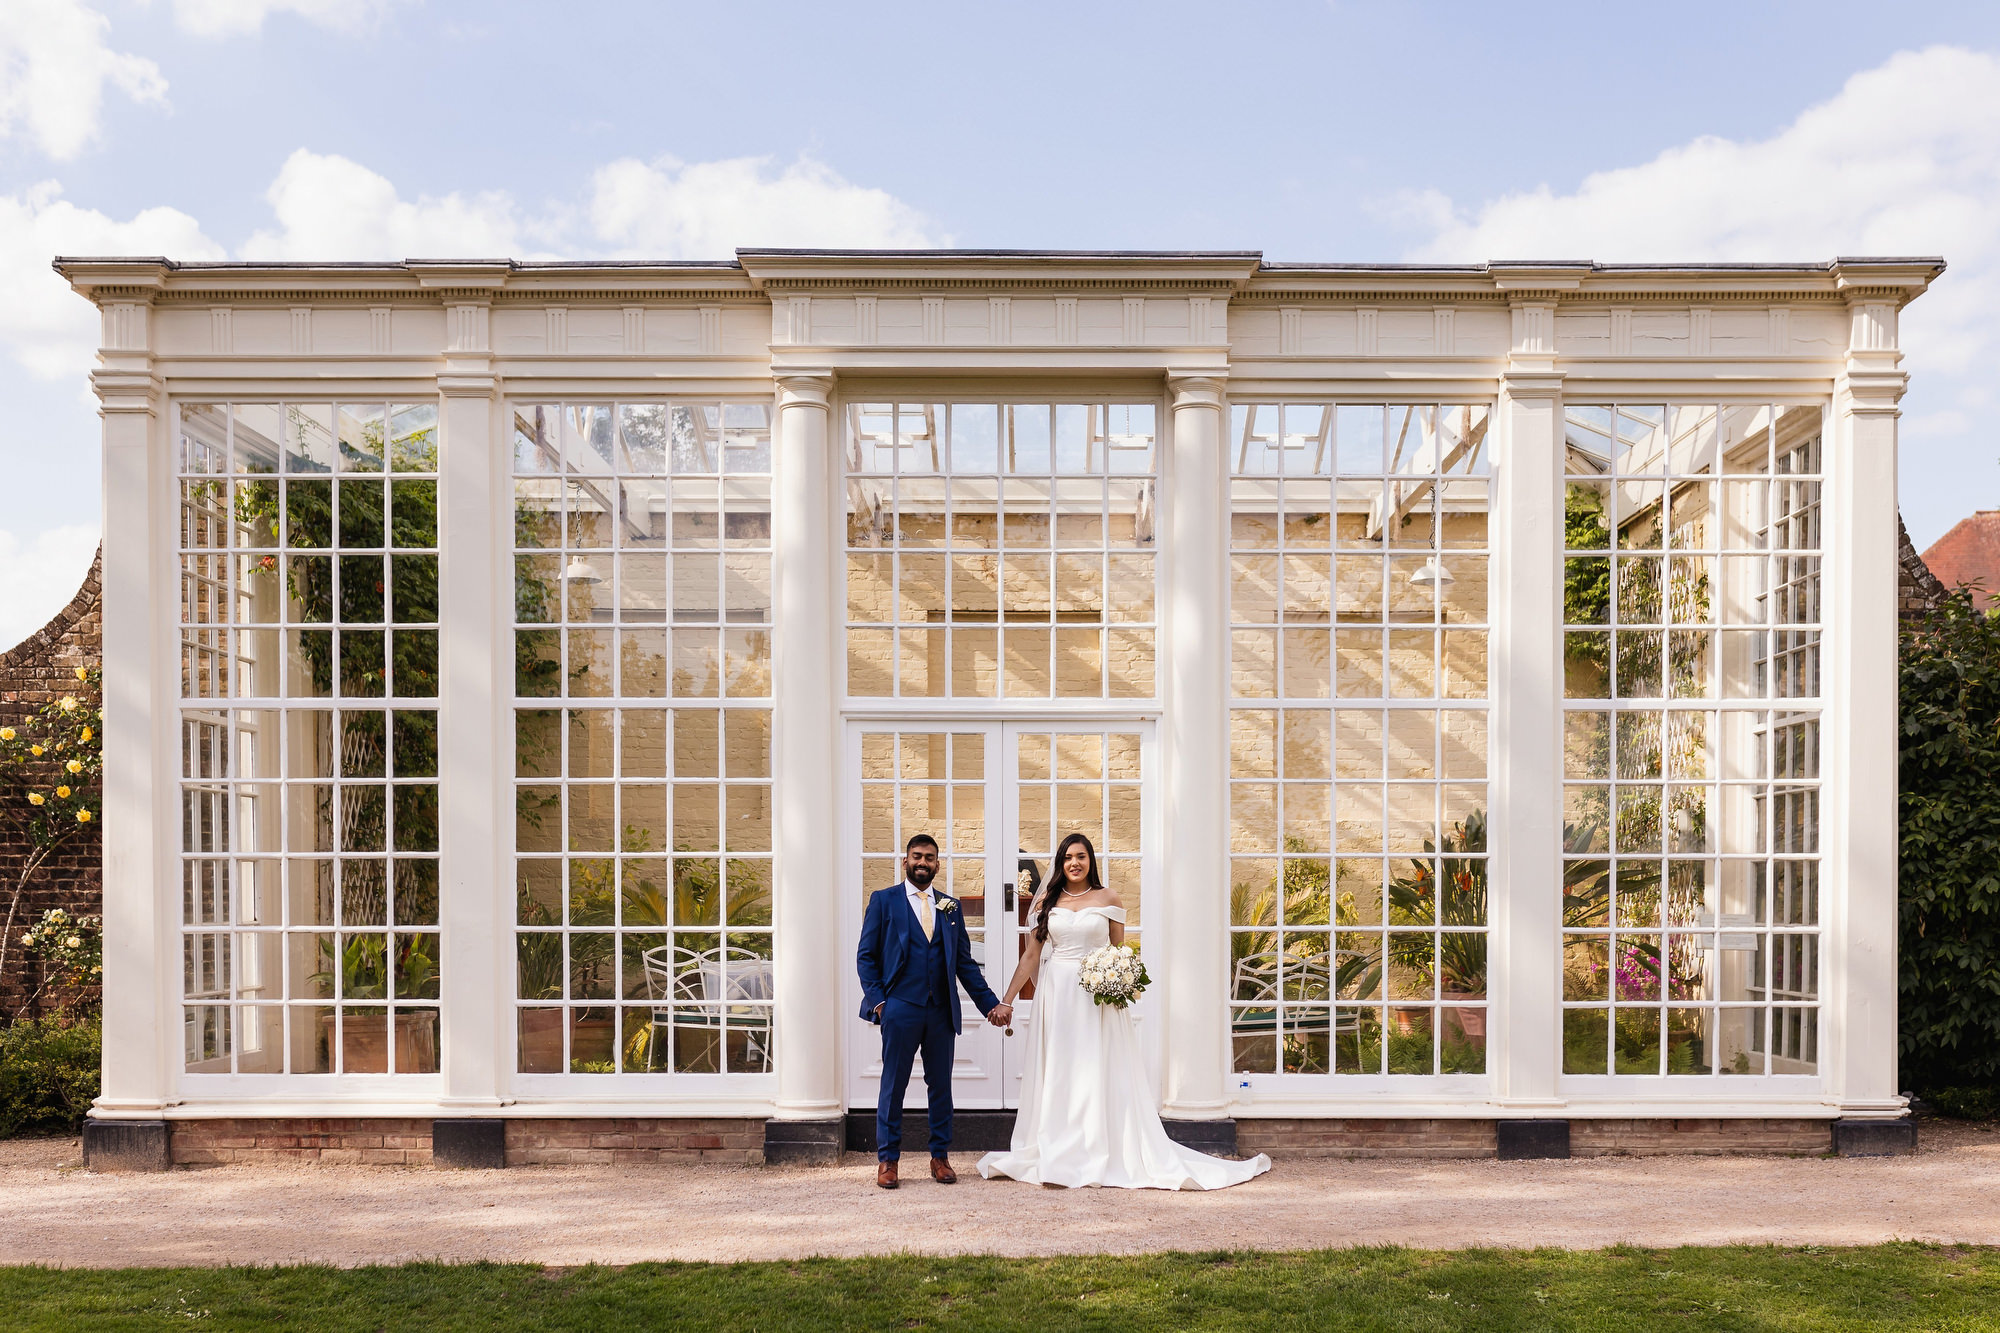 Langtons House, Essex, Natural wedding photography, Civil ceremony, couples portraits